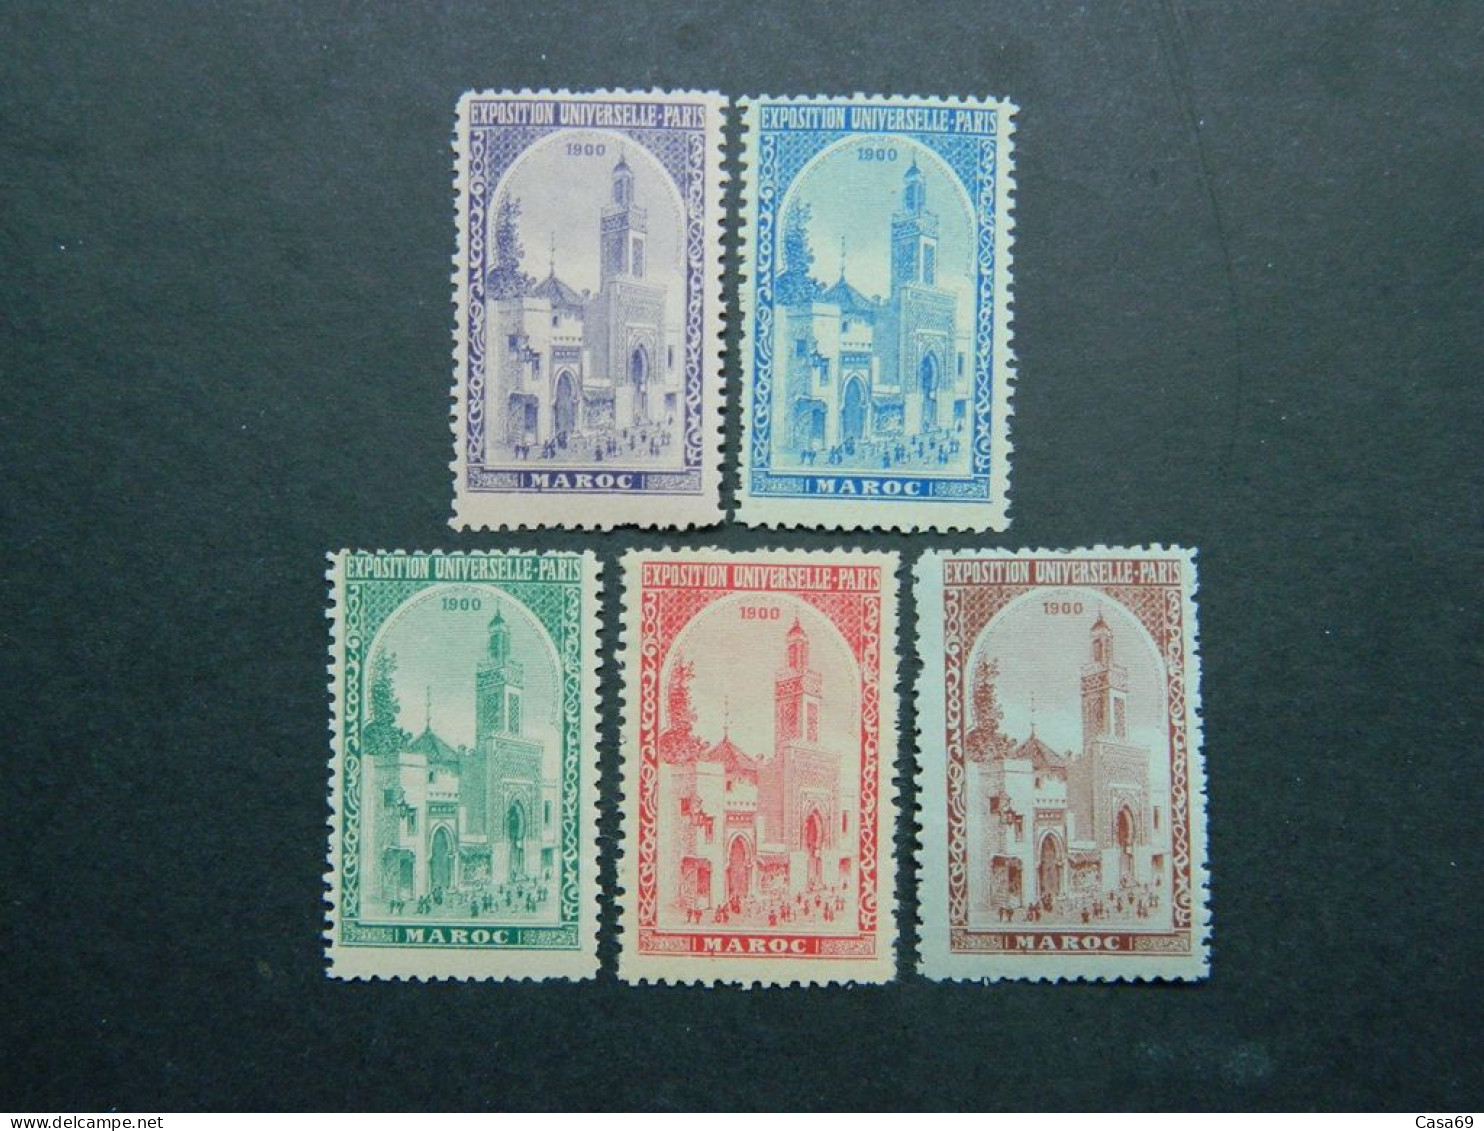 Vignettes Exposition Universelle Paris 1900 Maroc Poster Stamps Universal Exhibition Morocco - Cinderellas